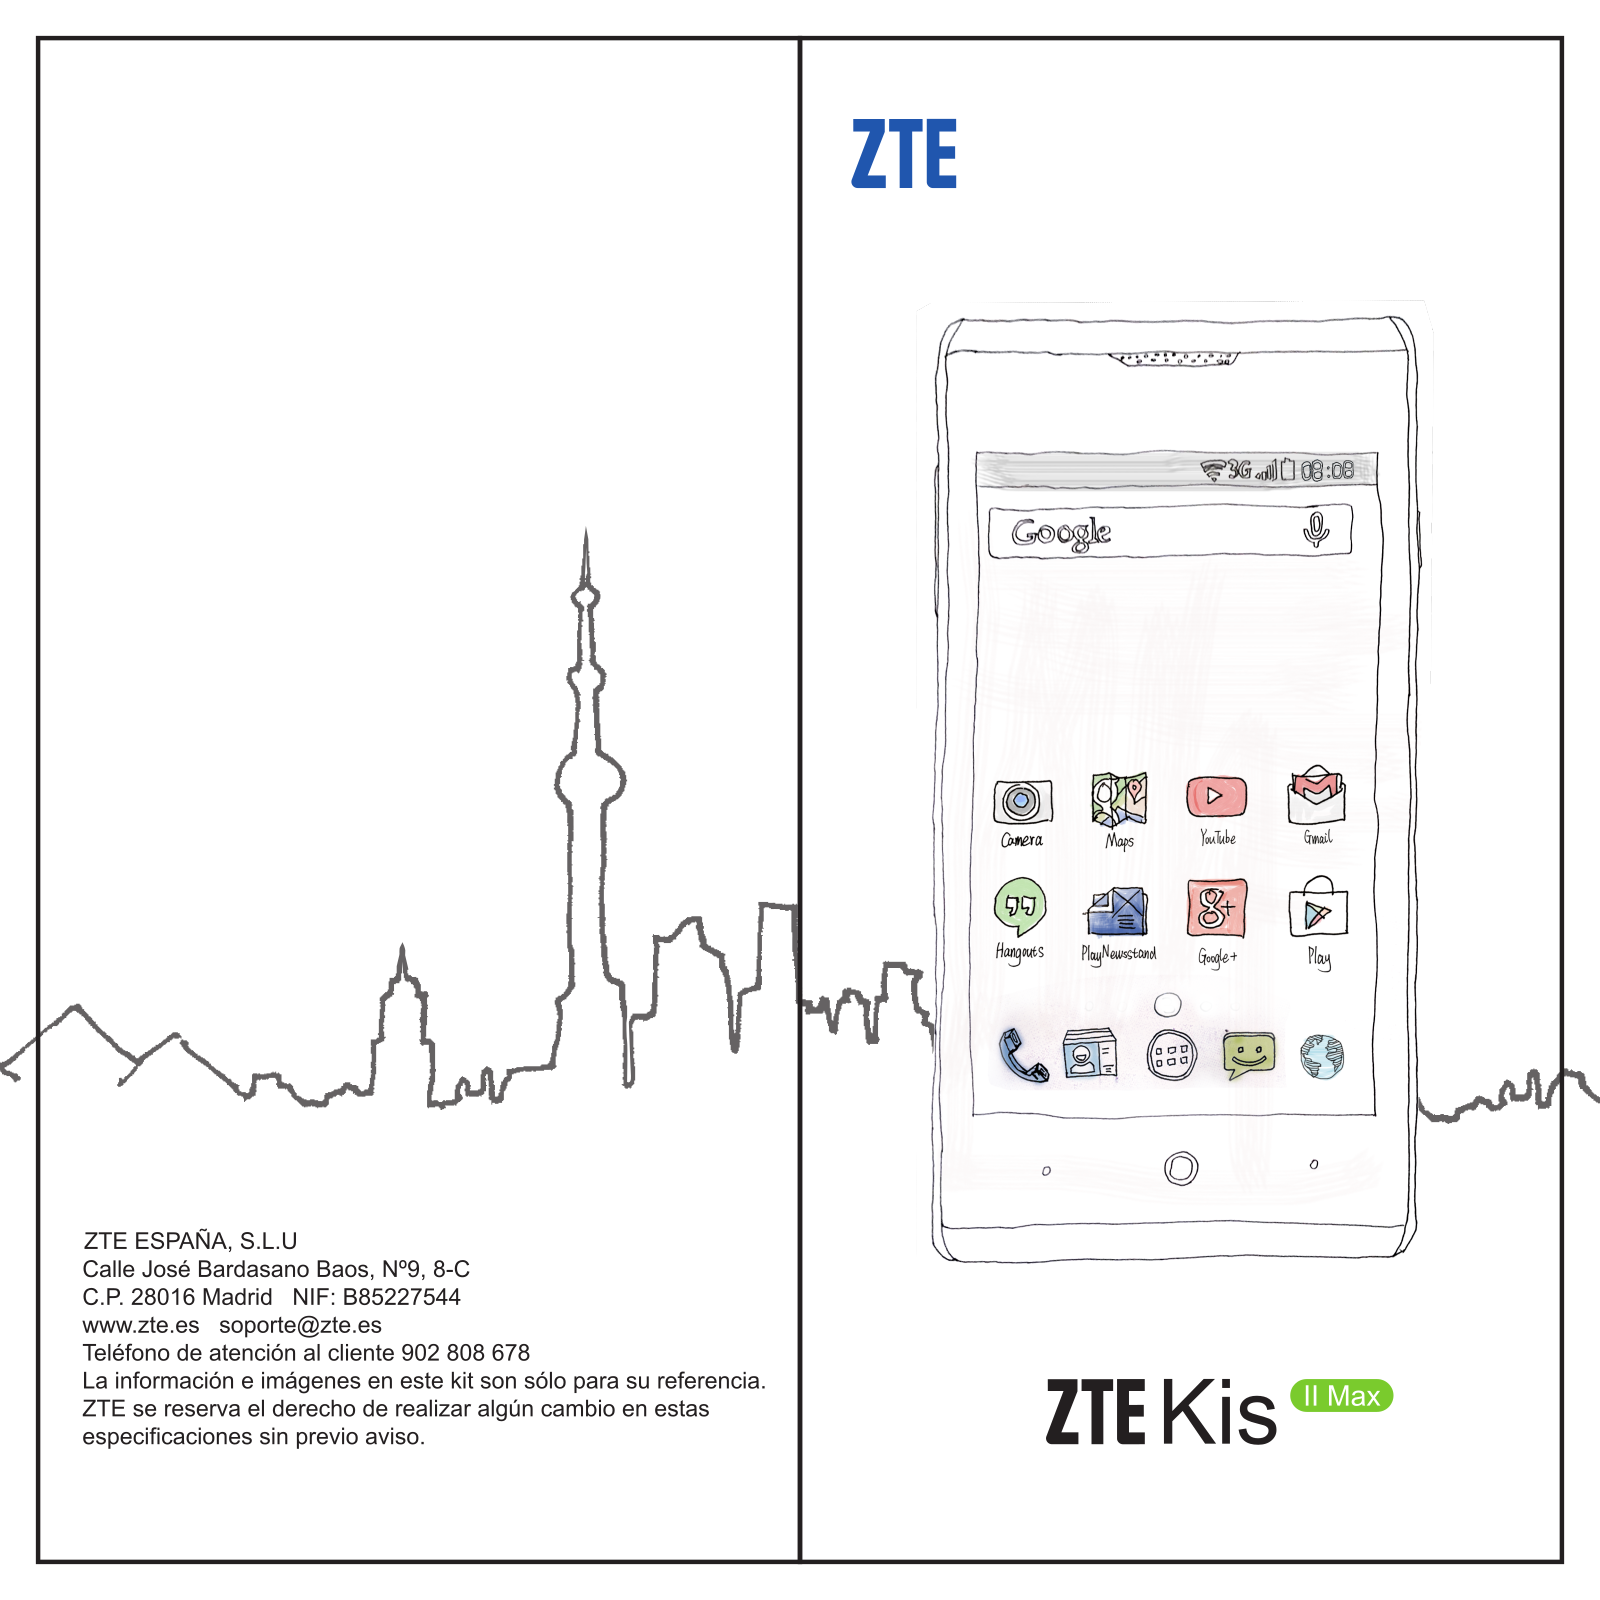 ZTE KIS II Max User Manual